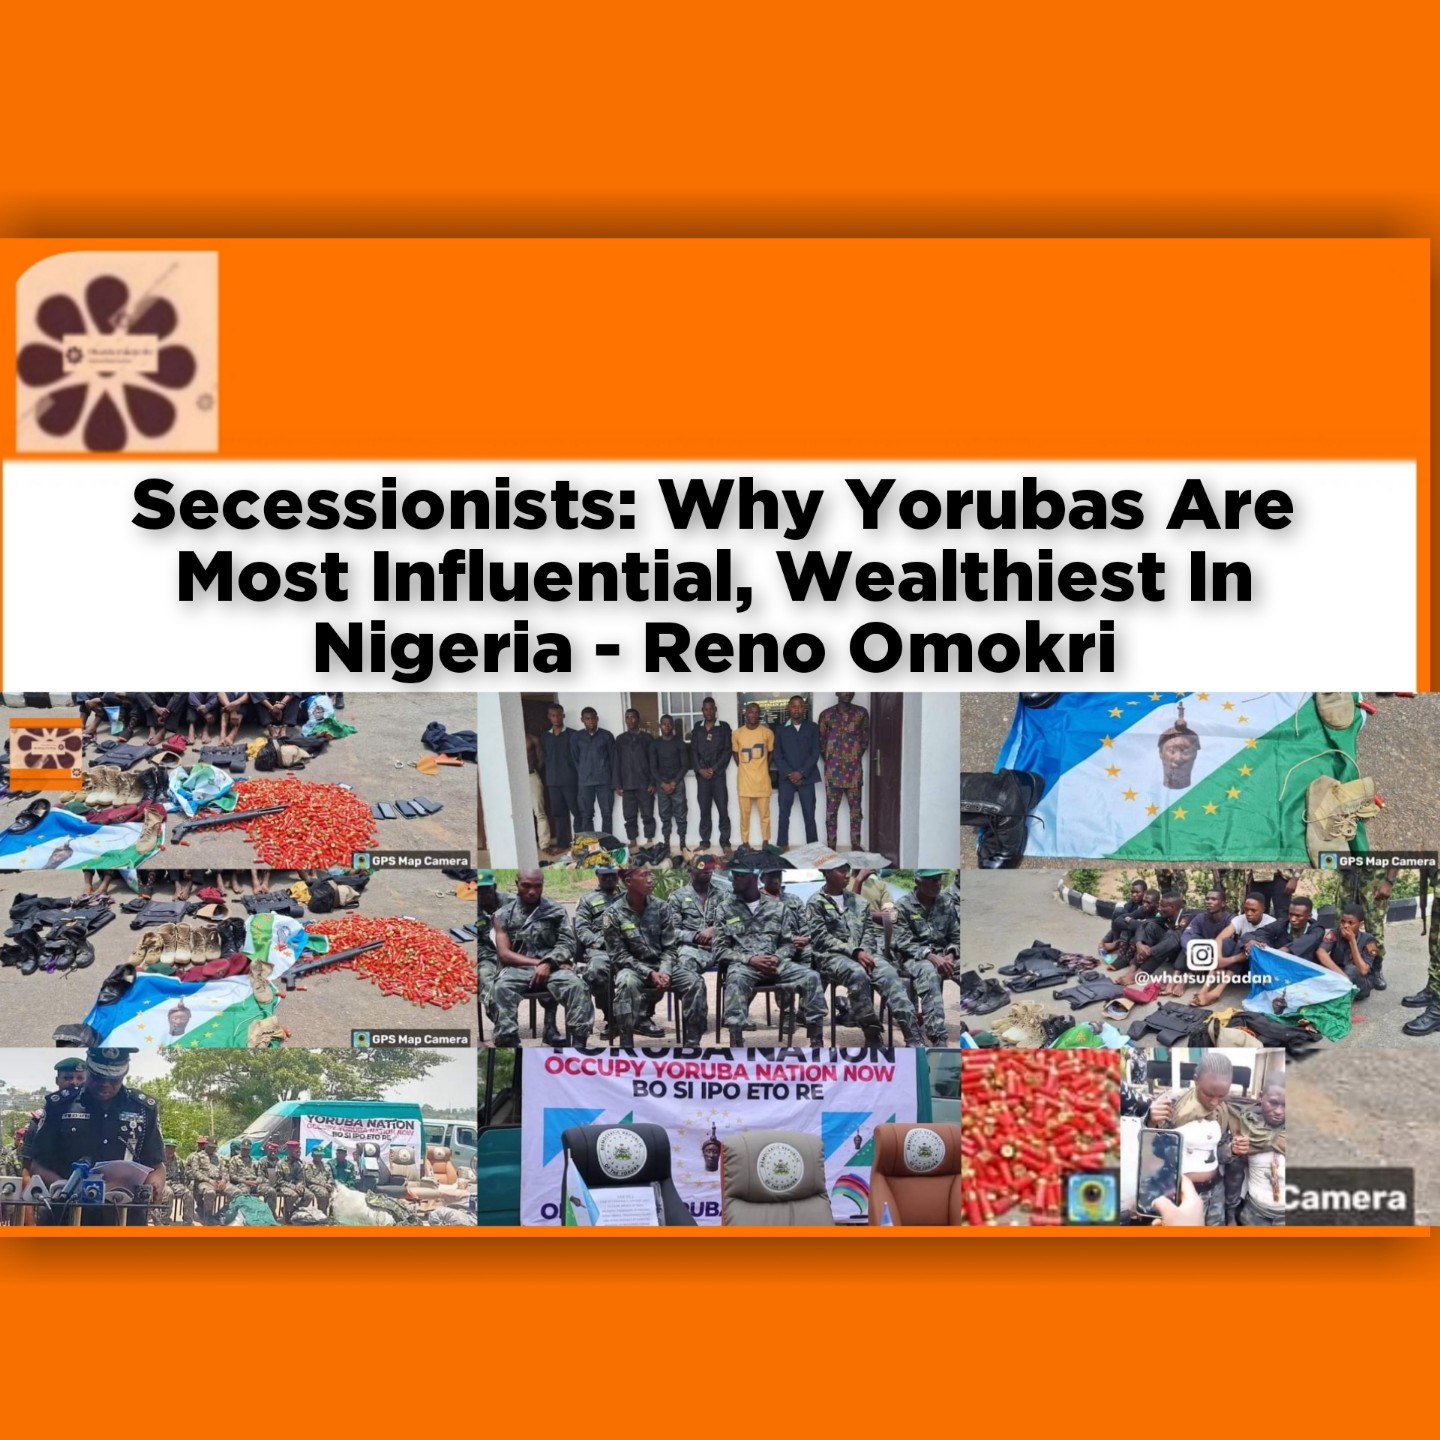 Secessionists: Why Yorubas Are Most Influential, Wealthiest In Nigeria - Reno Omokri ~ OsazuwaAkonedo #Tramadol